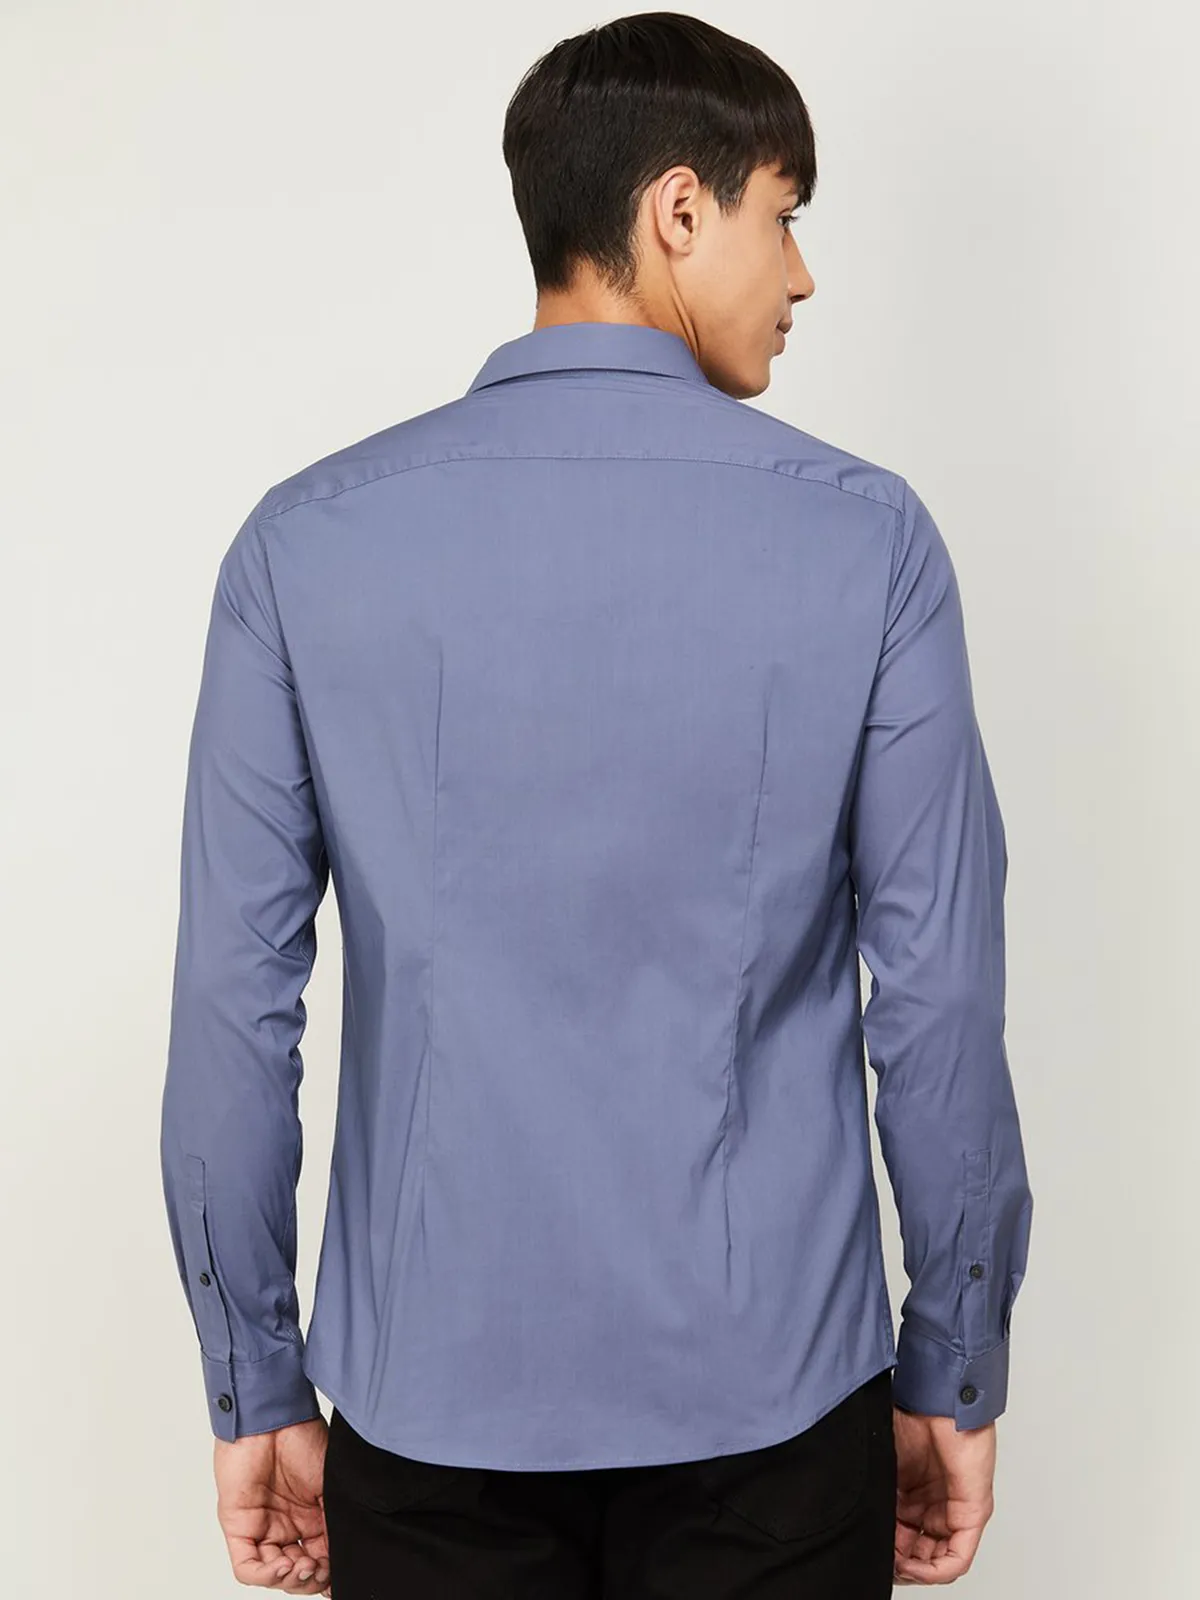 Celio stone blue plain shirt